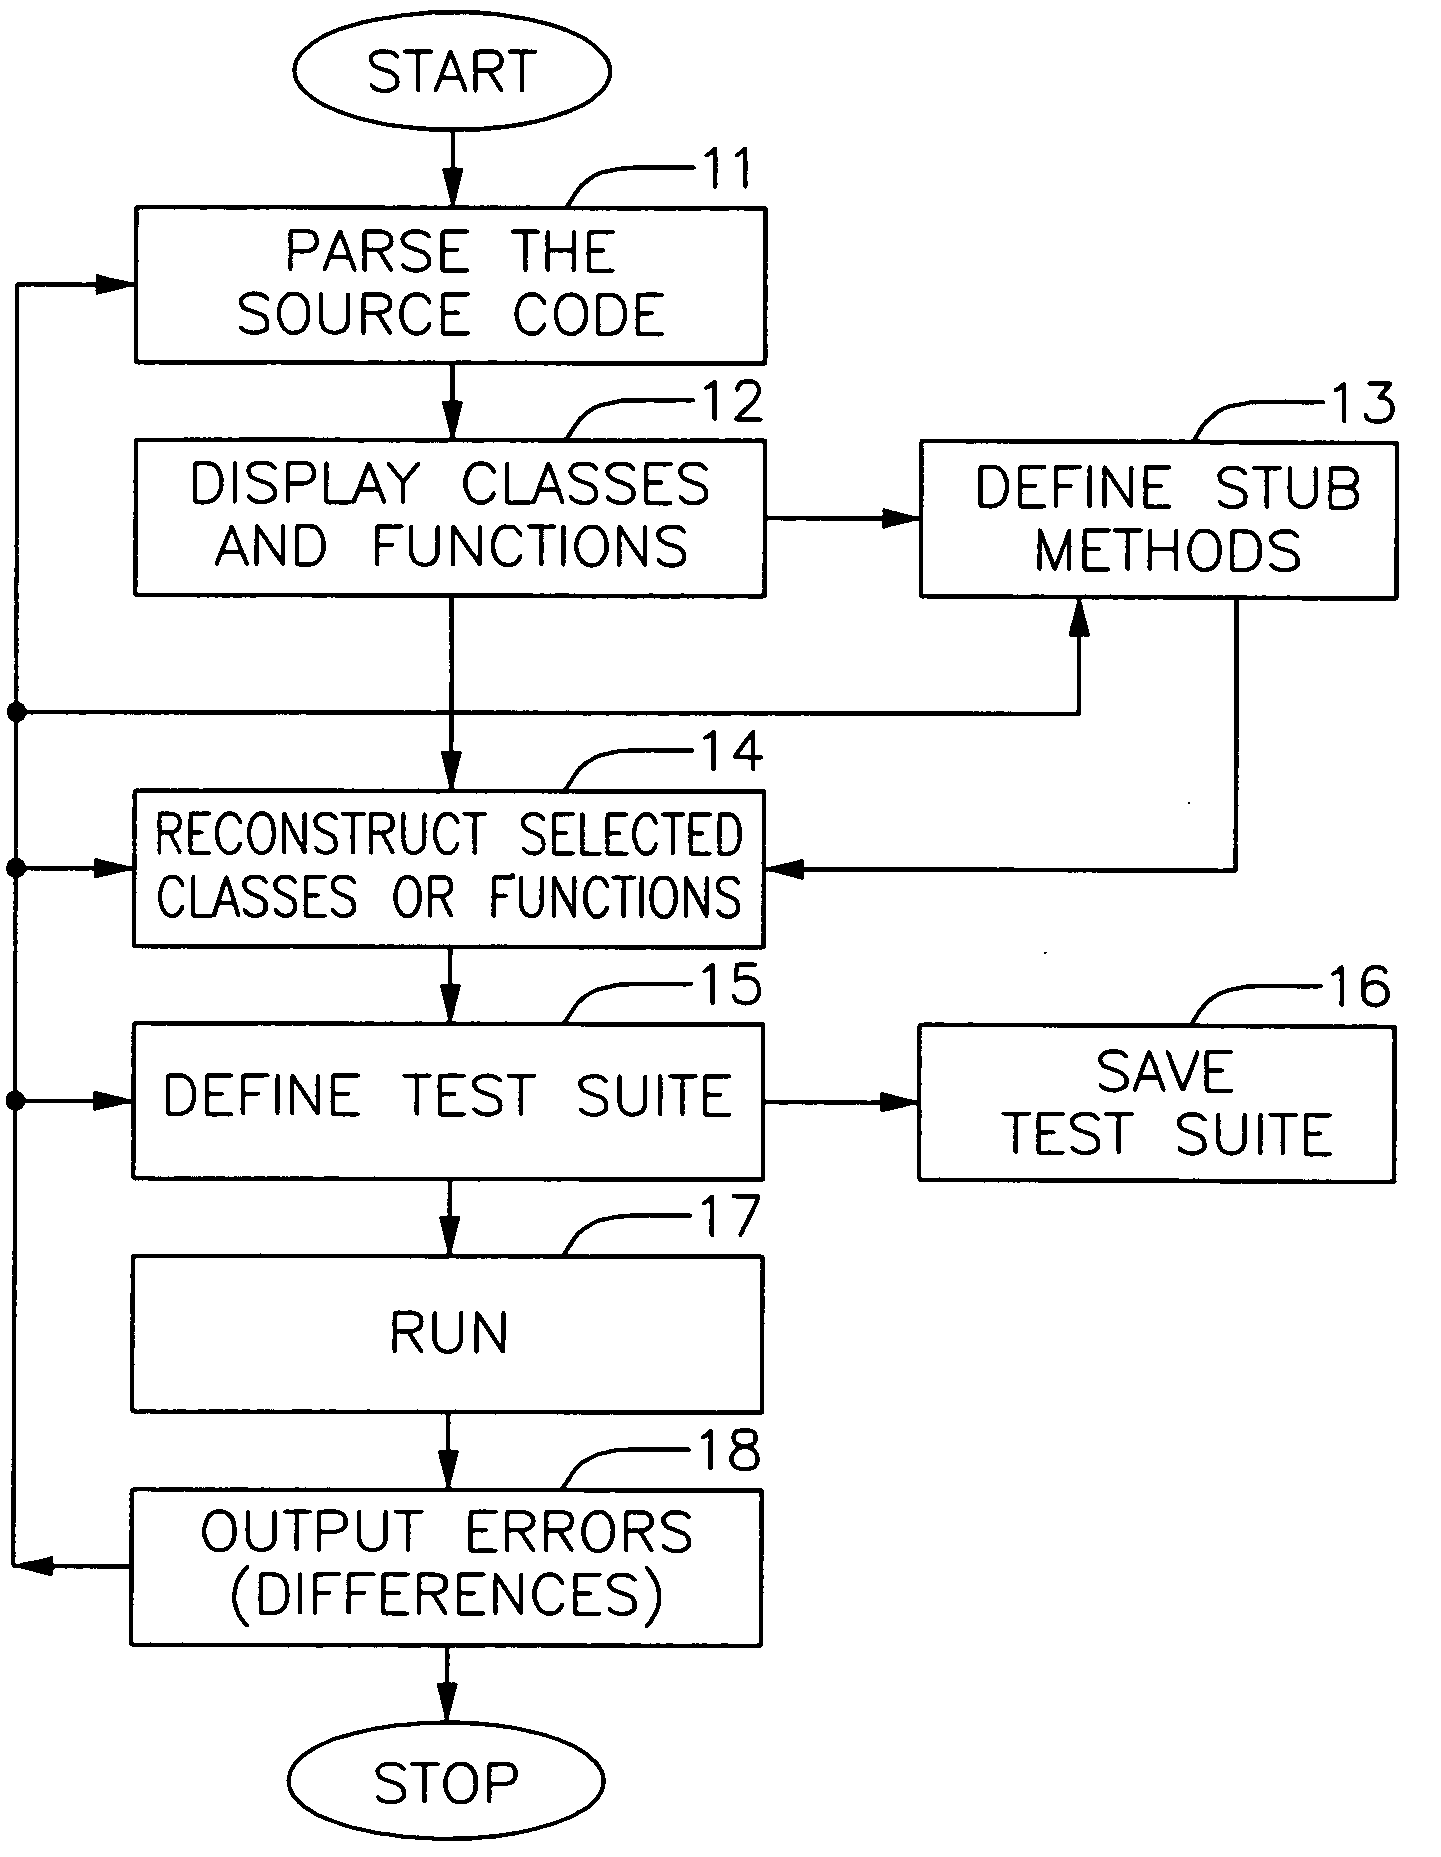 Modularizing a computer program for testing and debugging